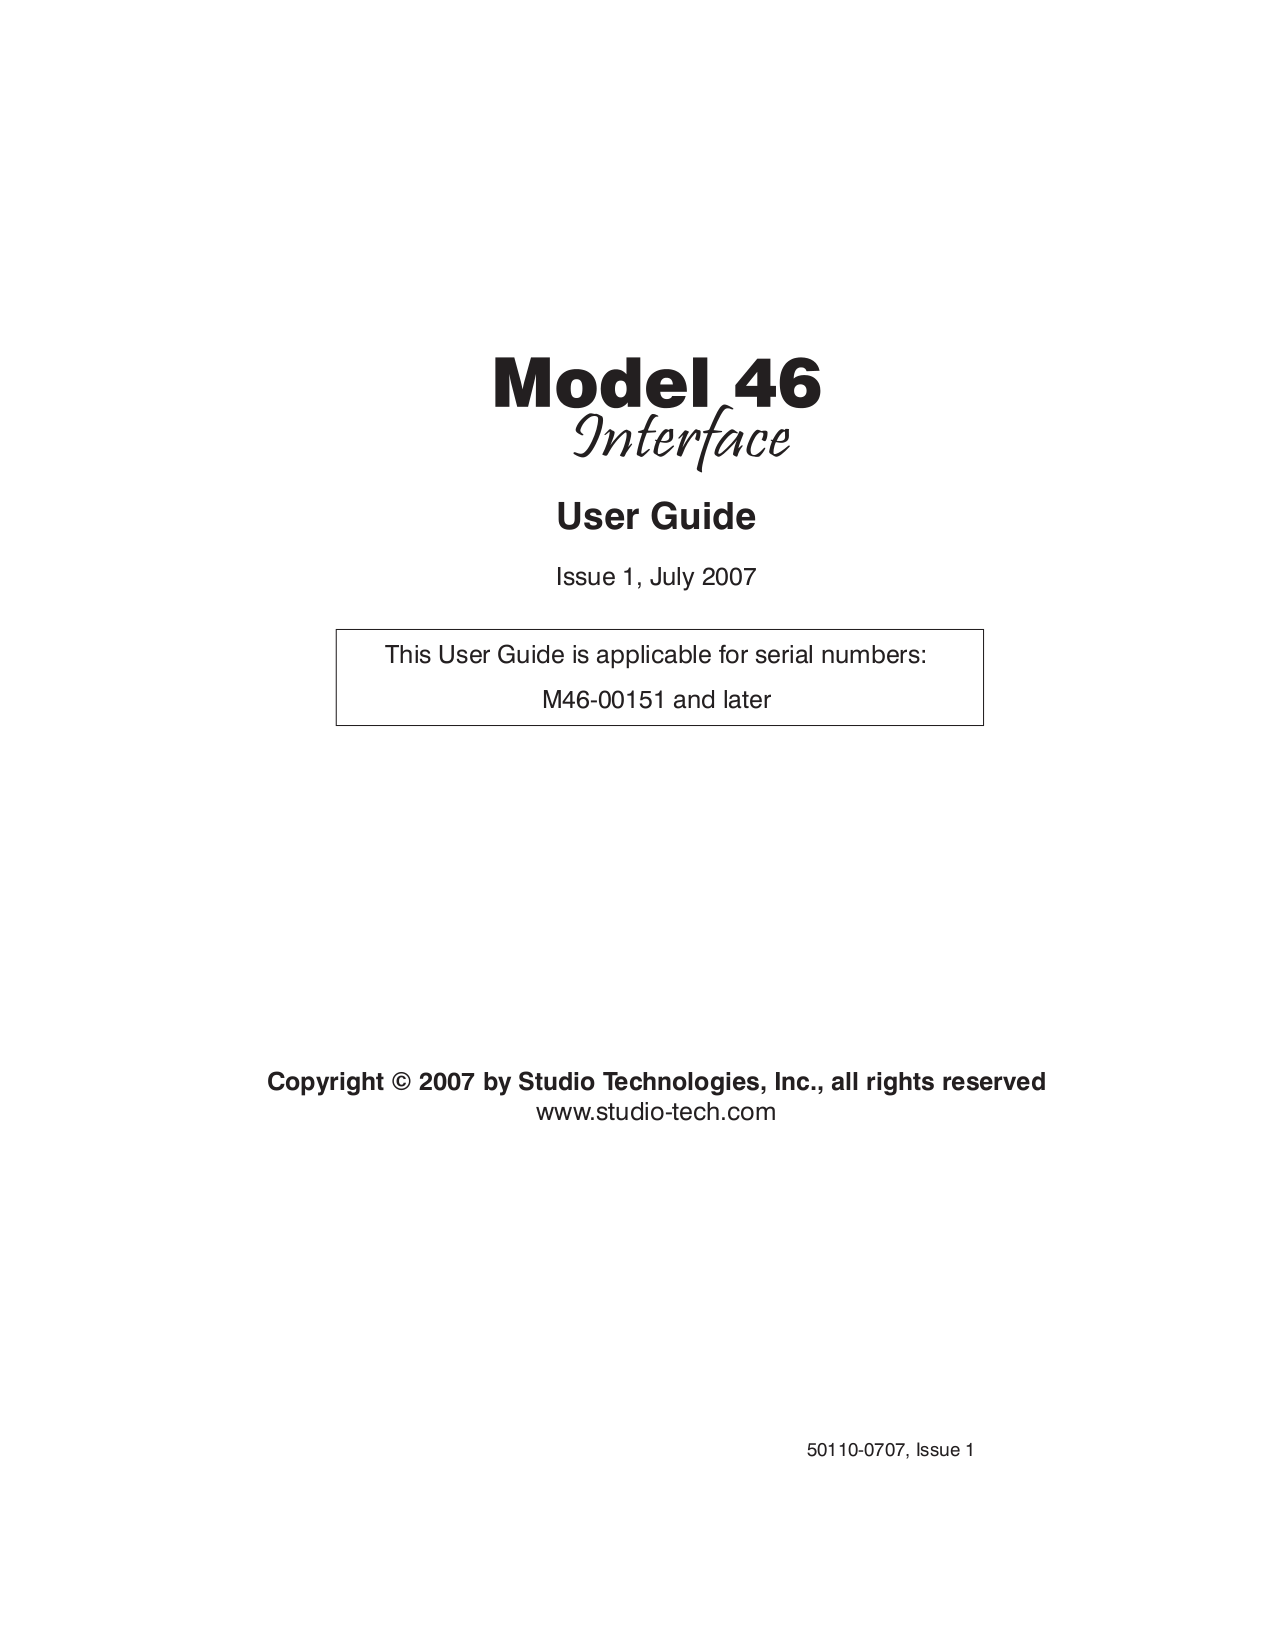 pdf for Telex Other BP-325 IntercomSystem manual